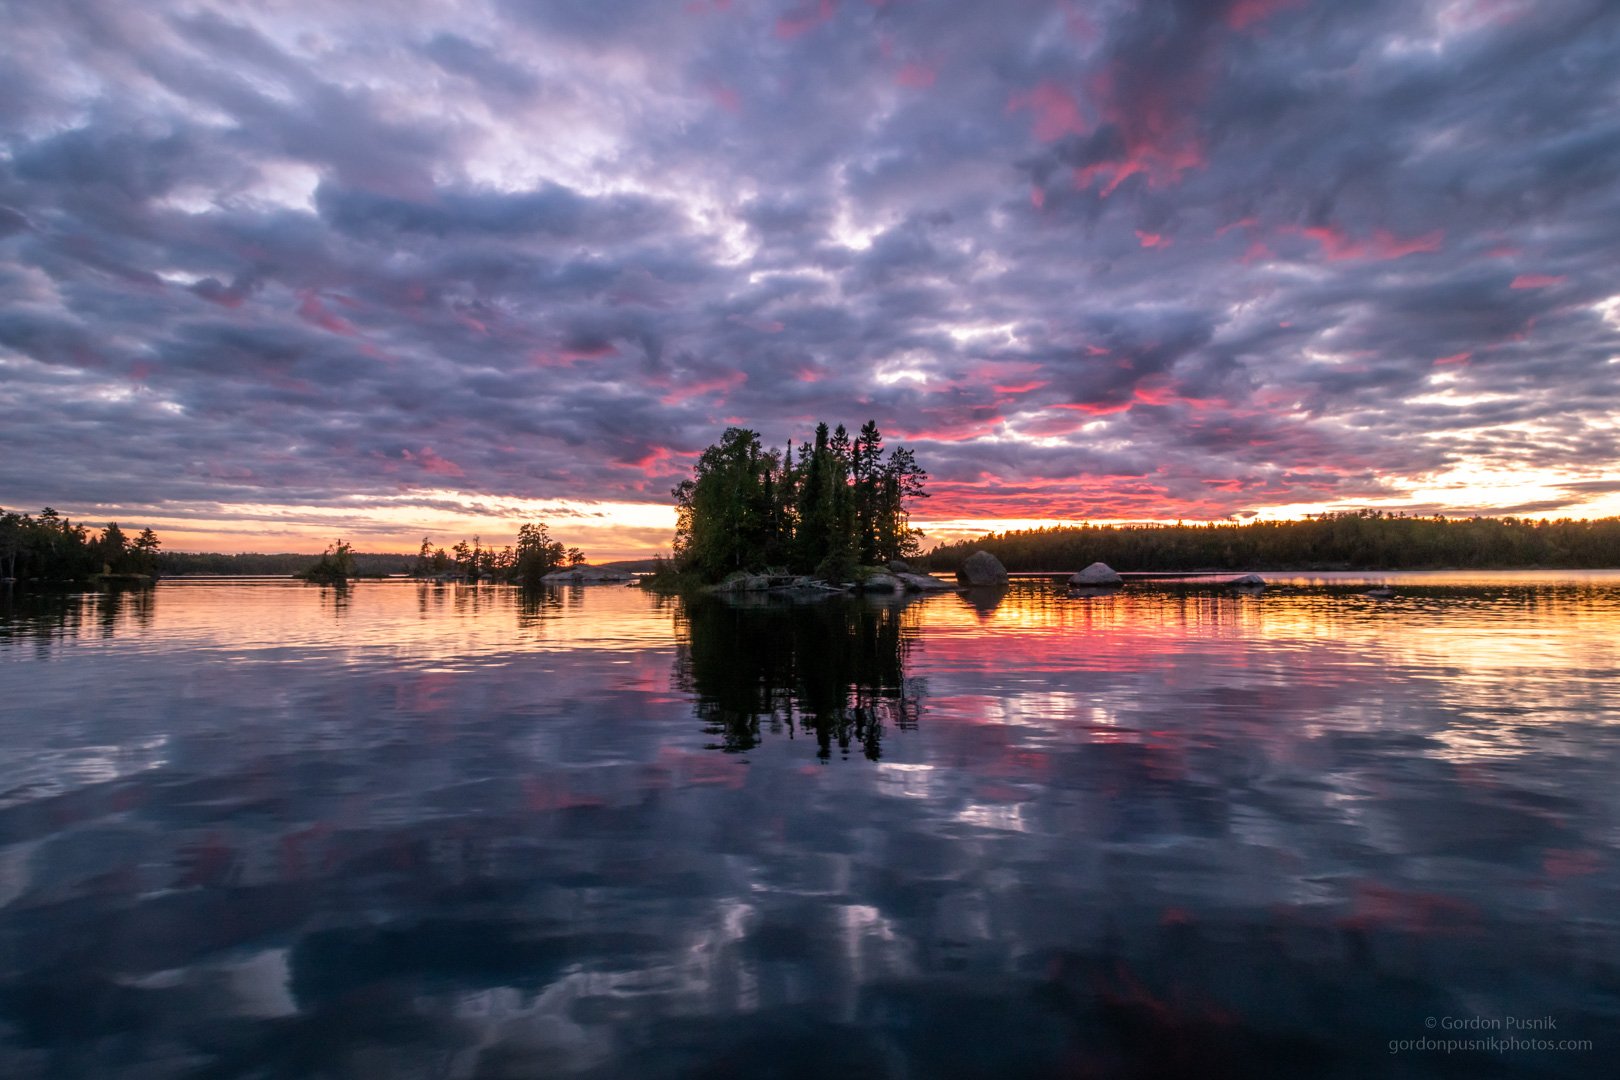 A nice Northwest Ontario sunset by Gordon Pusnik @gordonpusnik